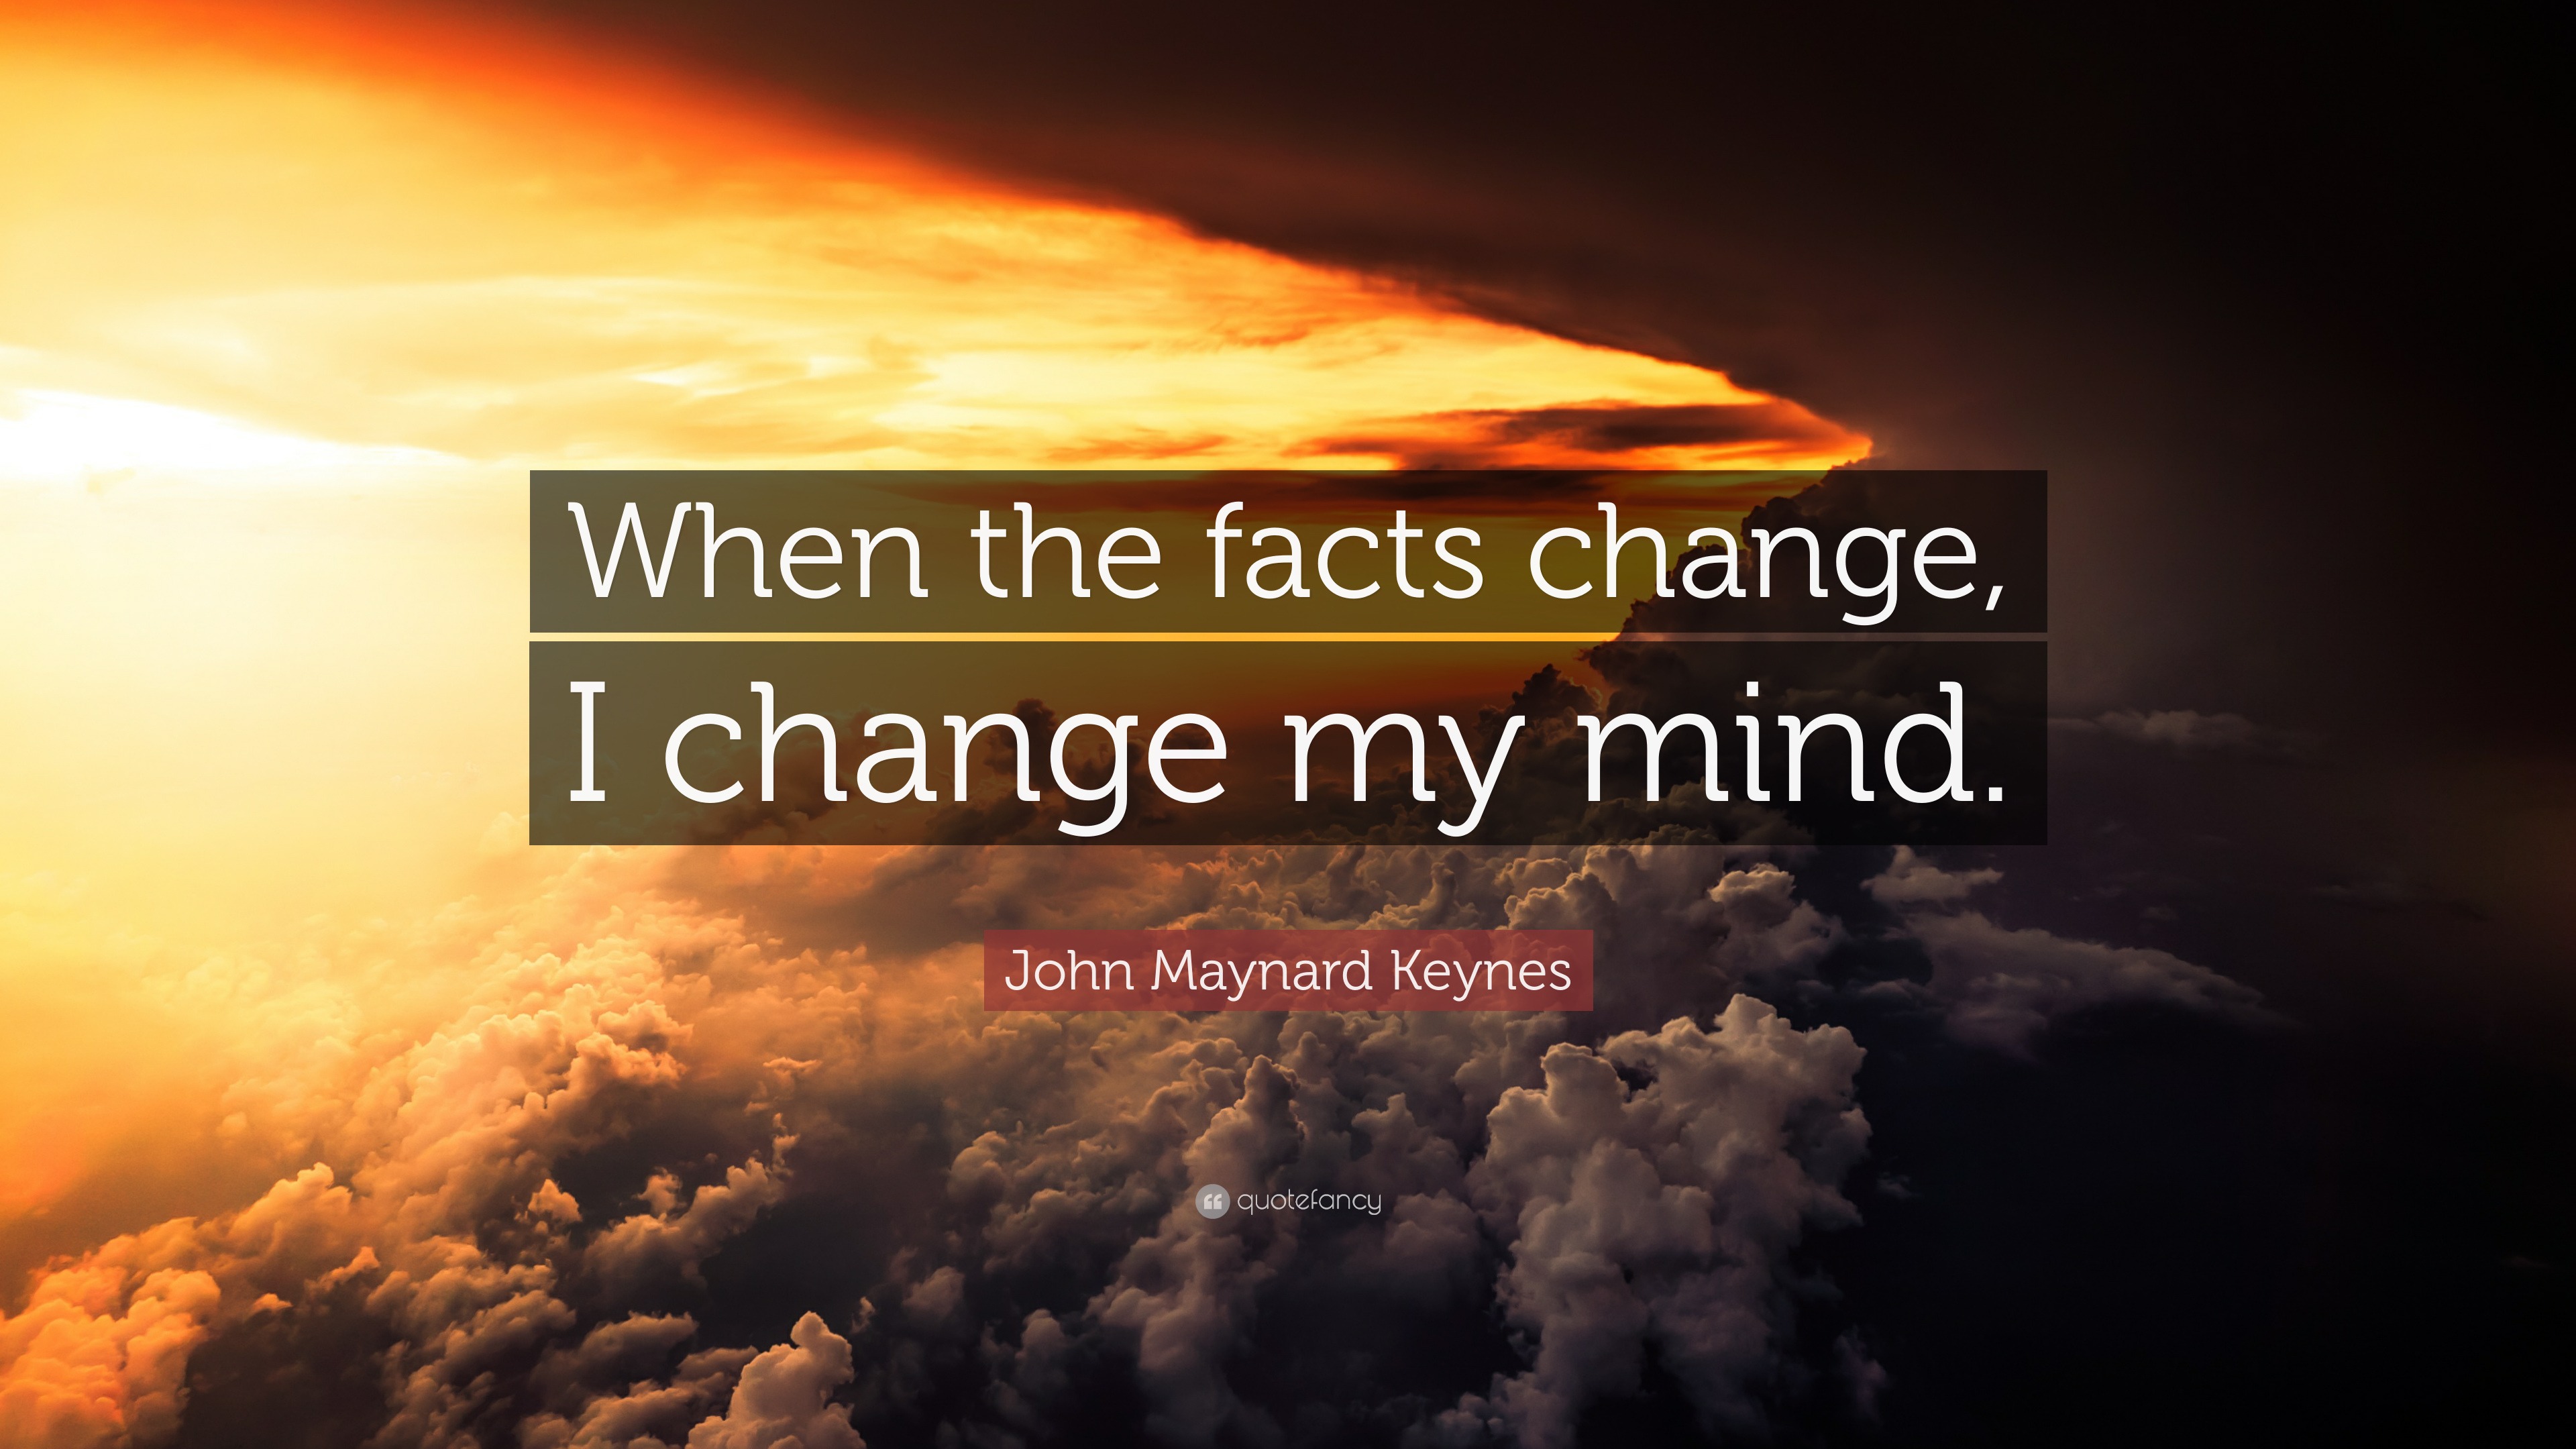 John Maynard Keynes Quote: “When the facts change, I change my mind.”